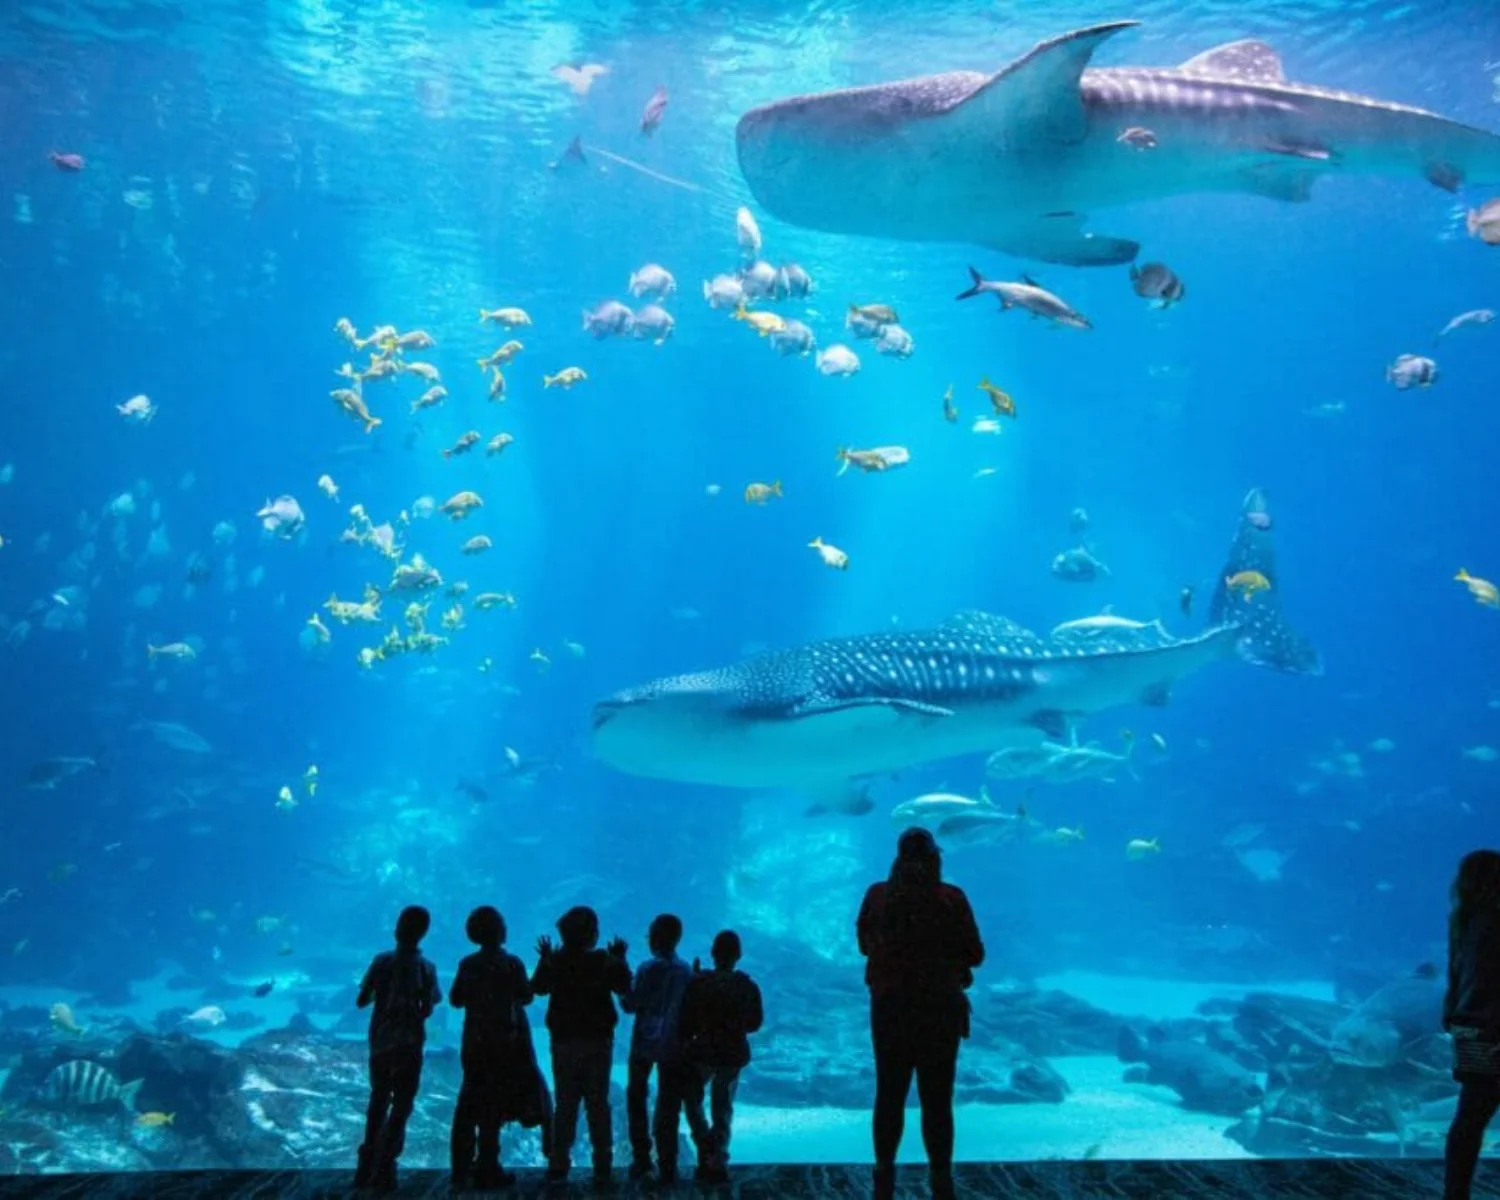 Fish in tanks at aquarium